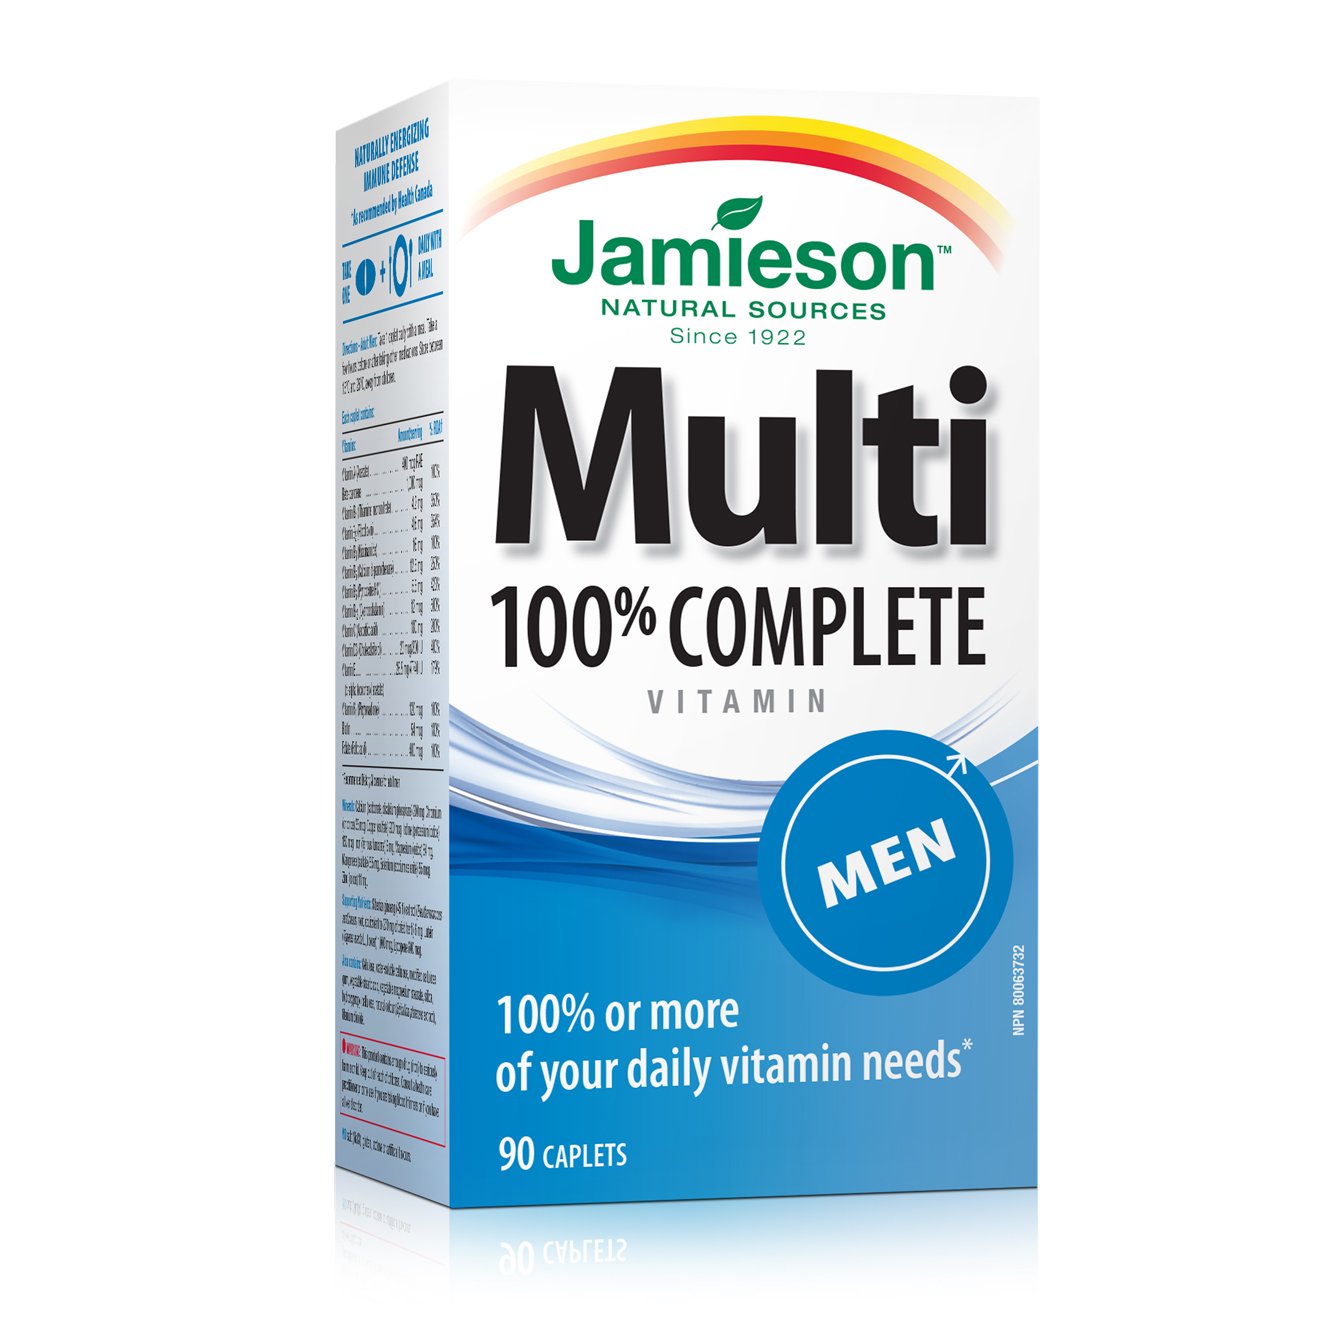 7870_100% Complete Multivitamin for Men_Pack_White Background